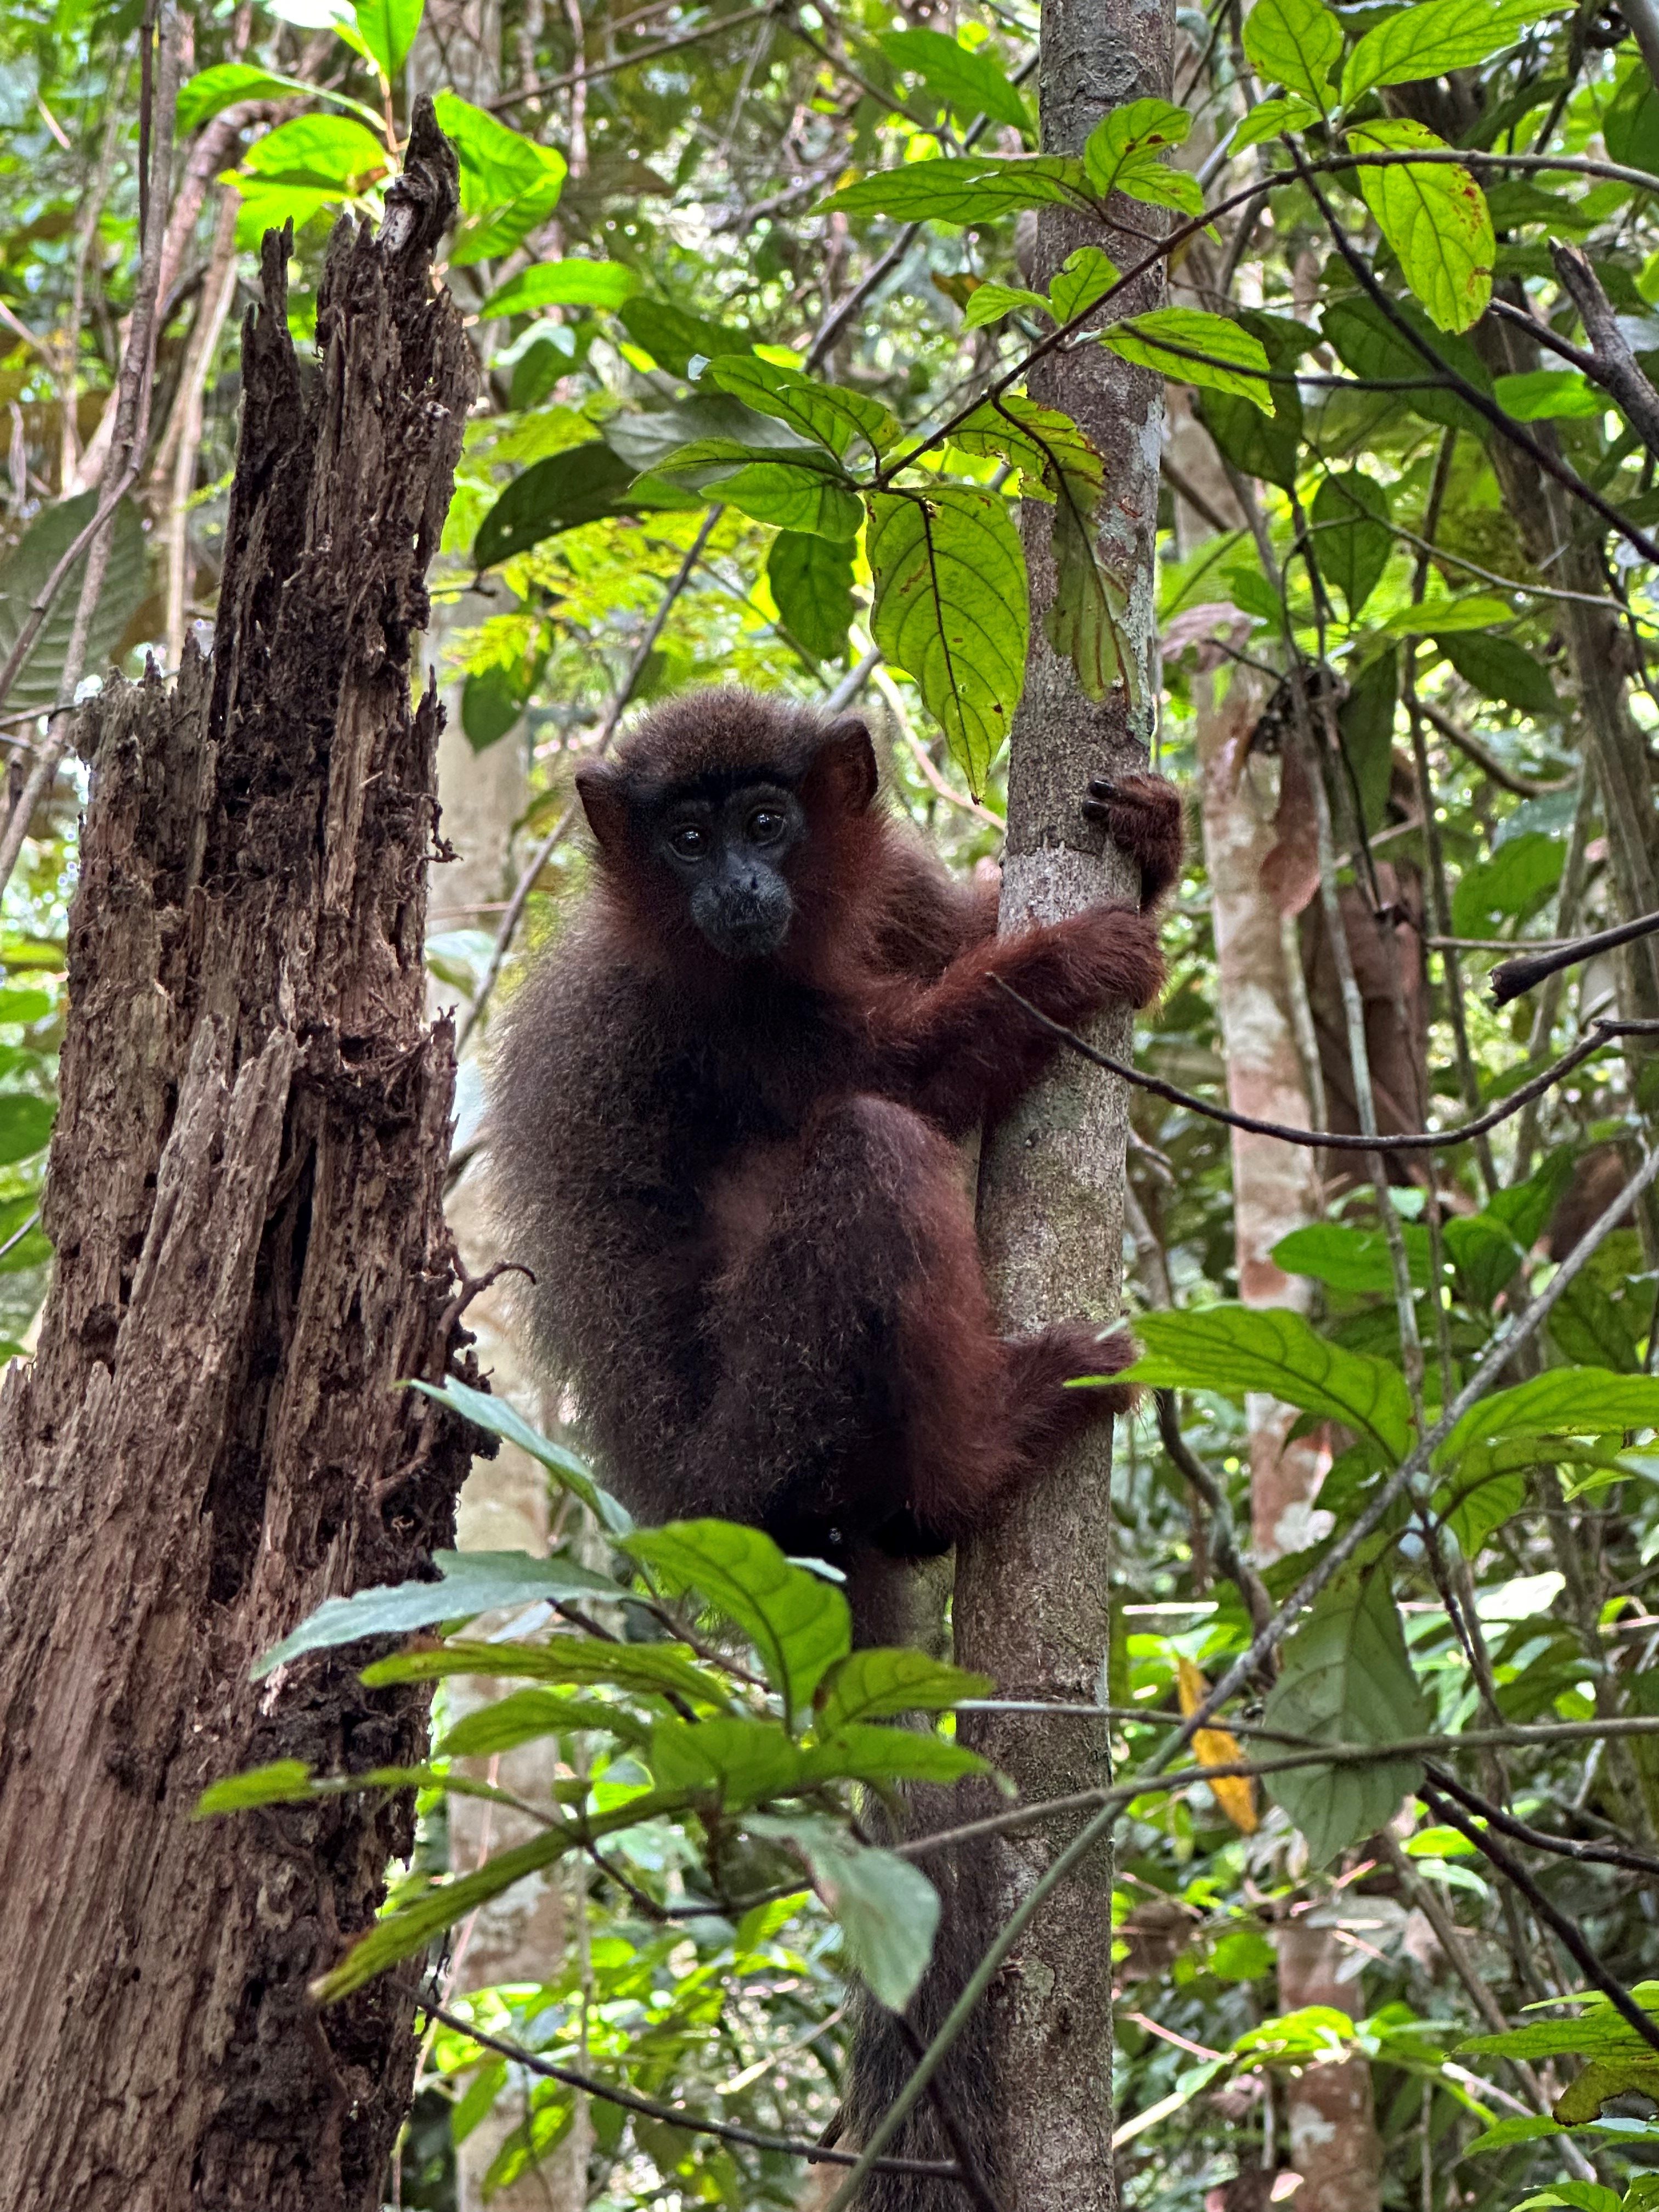 Image shows a reddish brown juvenile titi monkey climbing a tree, looking toward the camera.